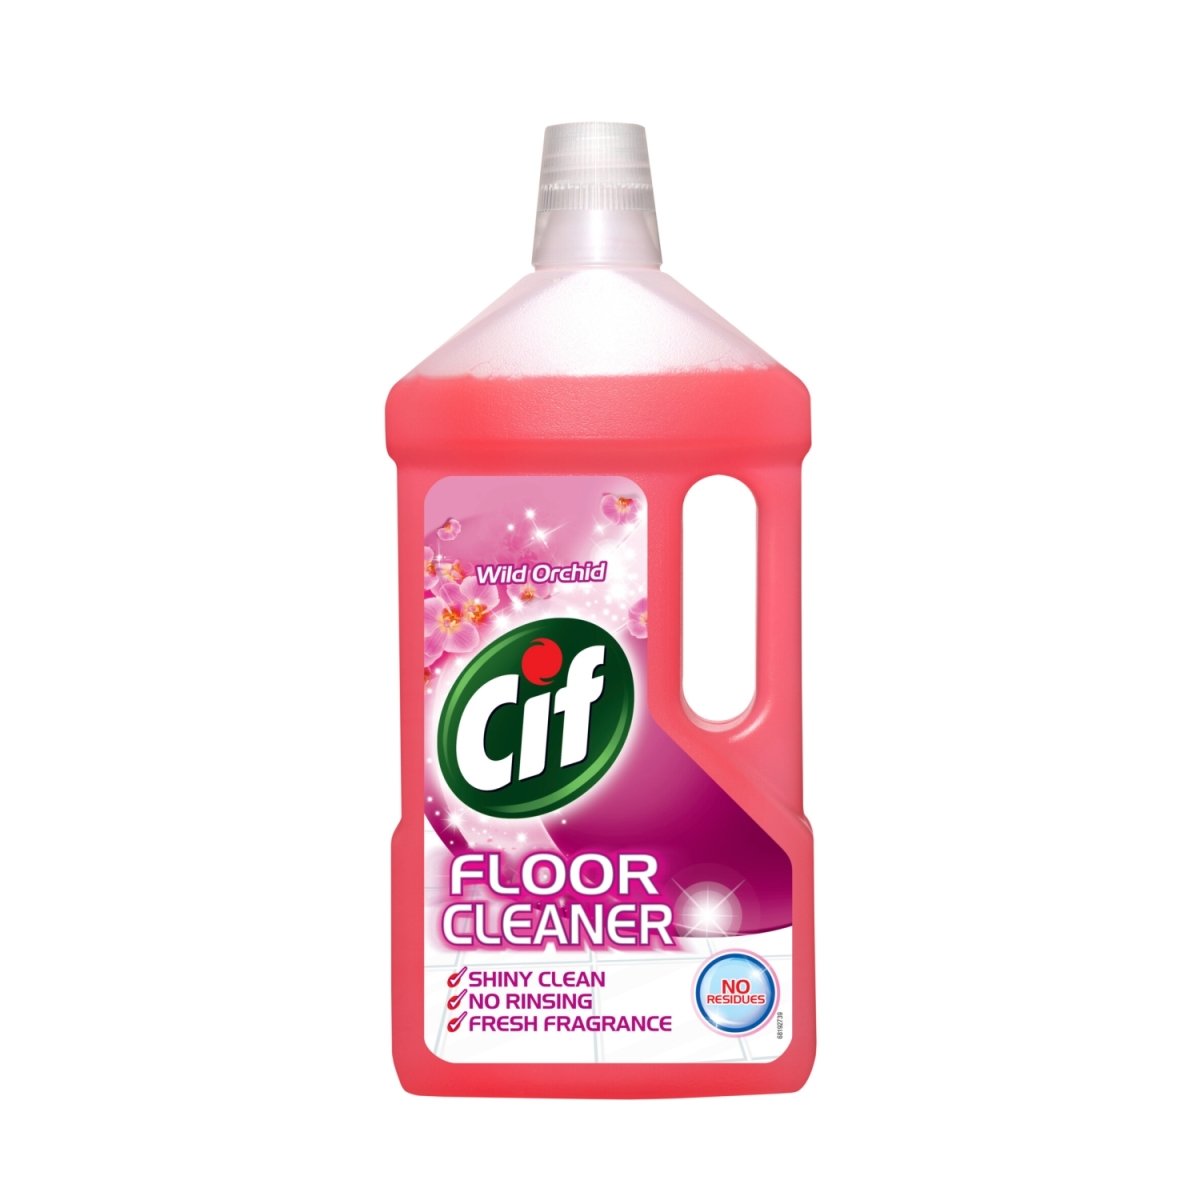 Cif Floor Cleaner 950ml Orchid - Intamarque 8710847994166